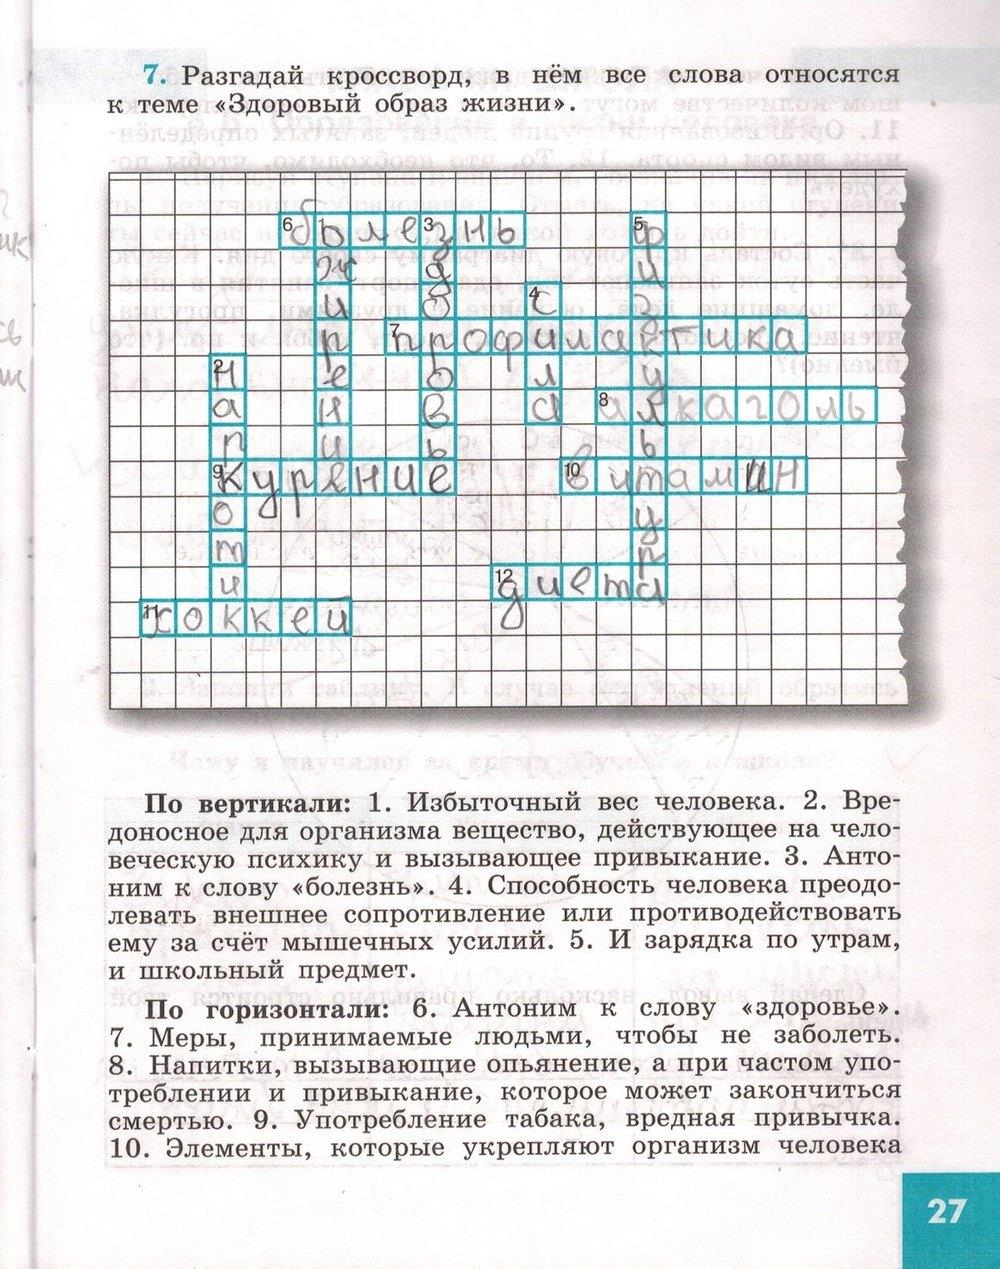 гдз 5 класс рабочая тетрадь страница 27 обществознание Иванова, Хотеенкова